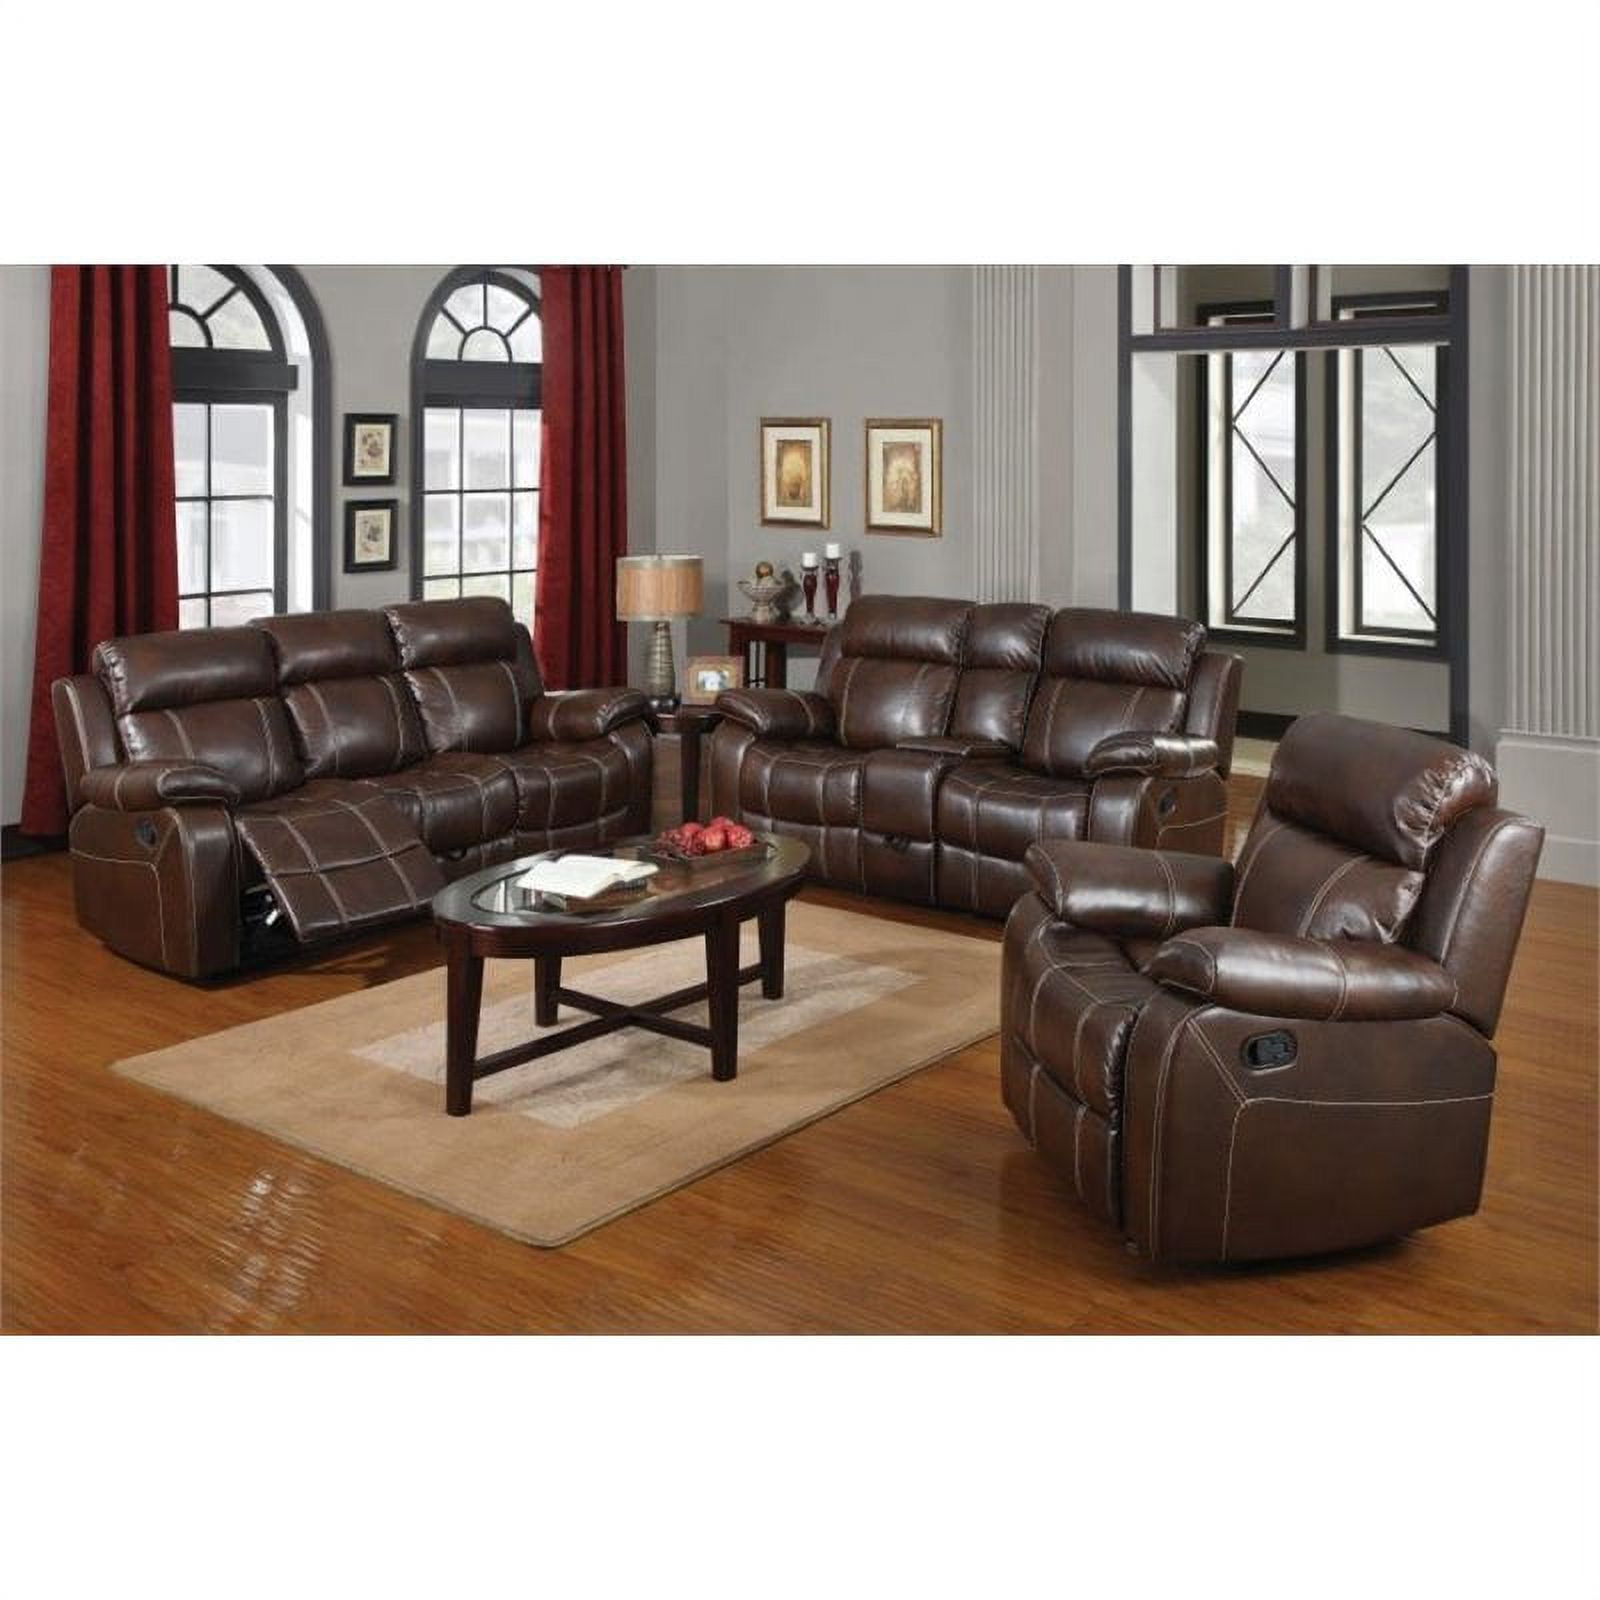 3 Piece Leather Reclining Sofa Set